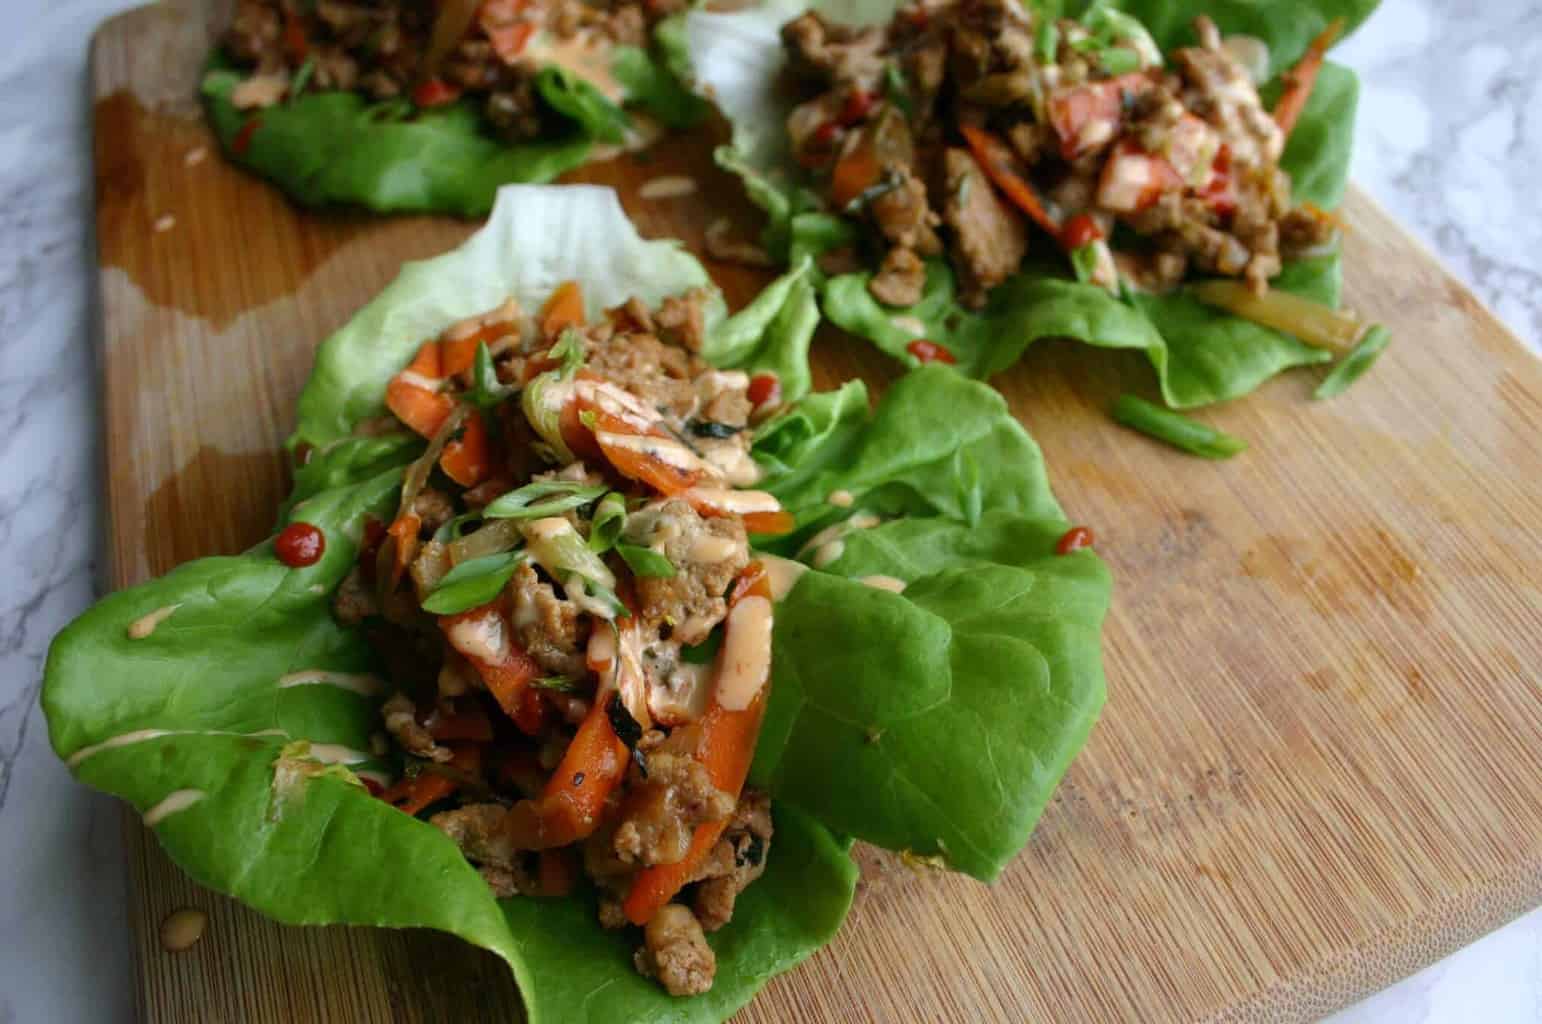 PF Changs Copycat Lettuce Wraps! Healthy Asian Ground Turkey Lettuce Wraps.